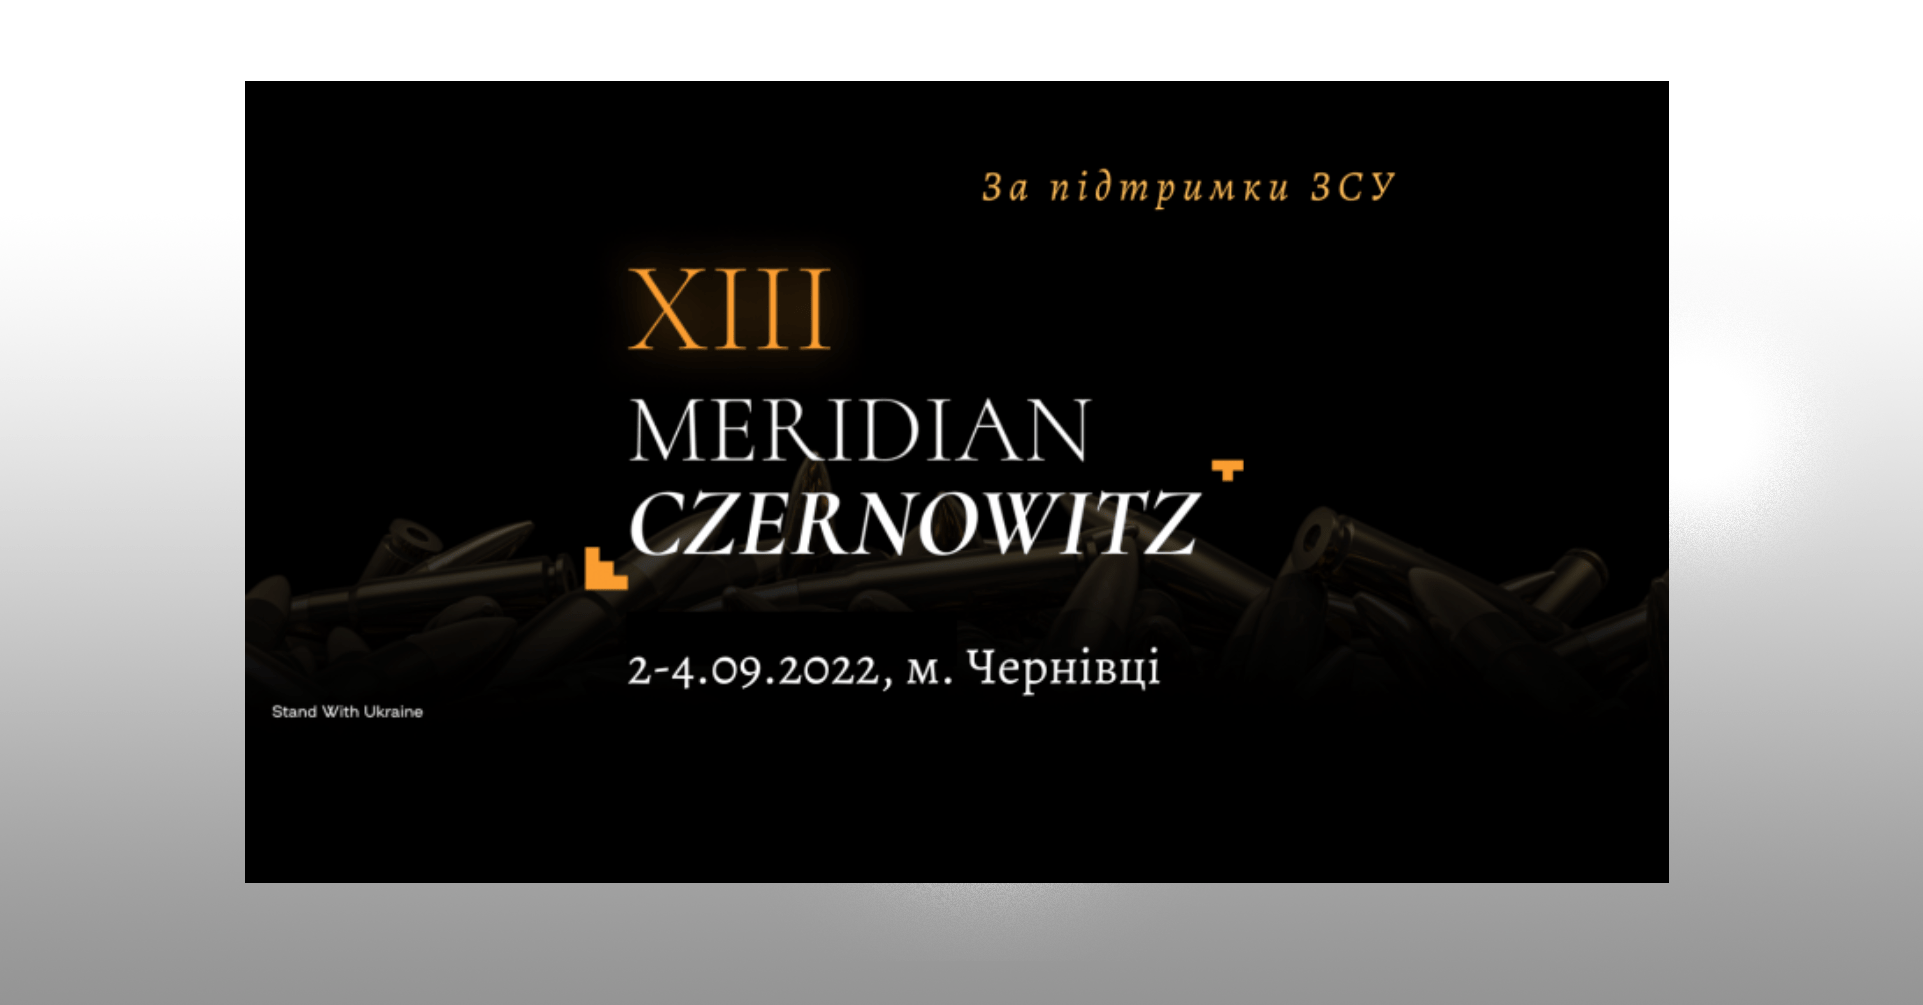 meridian 2022 prohrama - Оприлюднили програму XIII Міжнародних поетичних читань MERIDIAN CZERNOWITZ